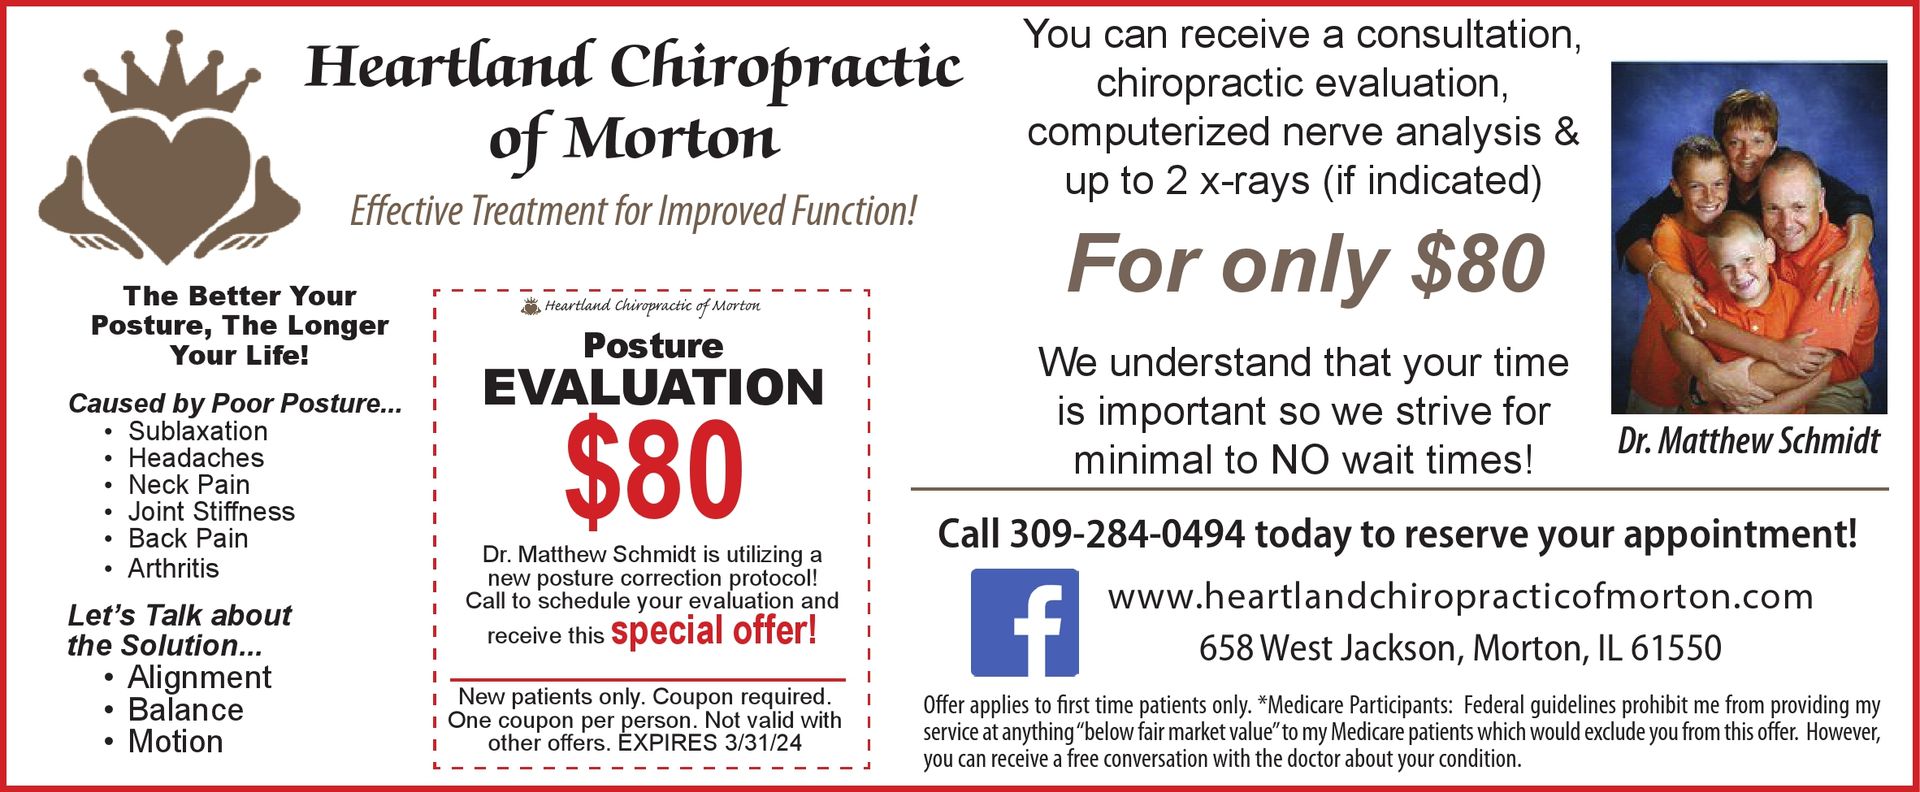 Heartland Chiropractic of Morton posture and consultation coupons Morton, IL